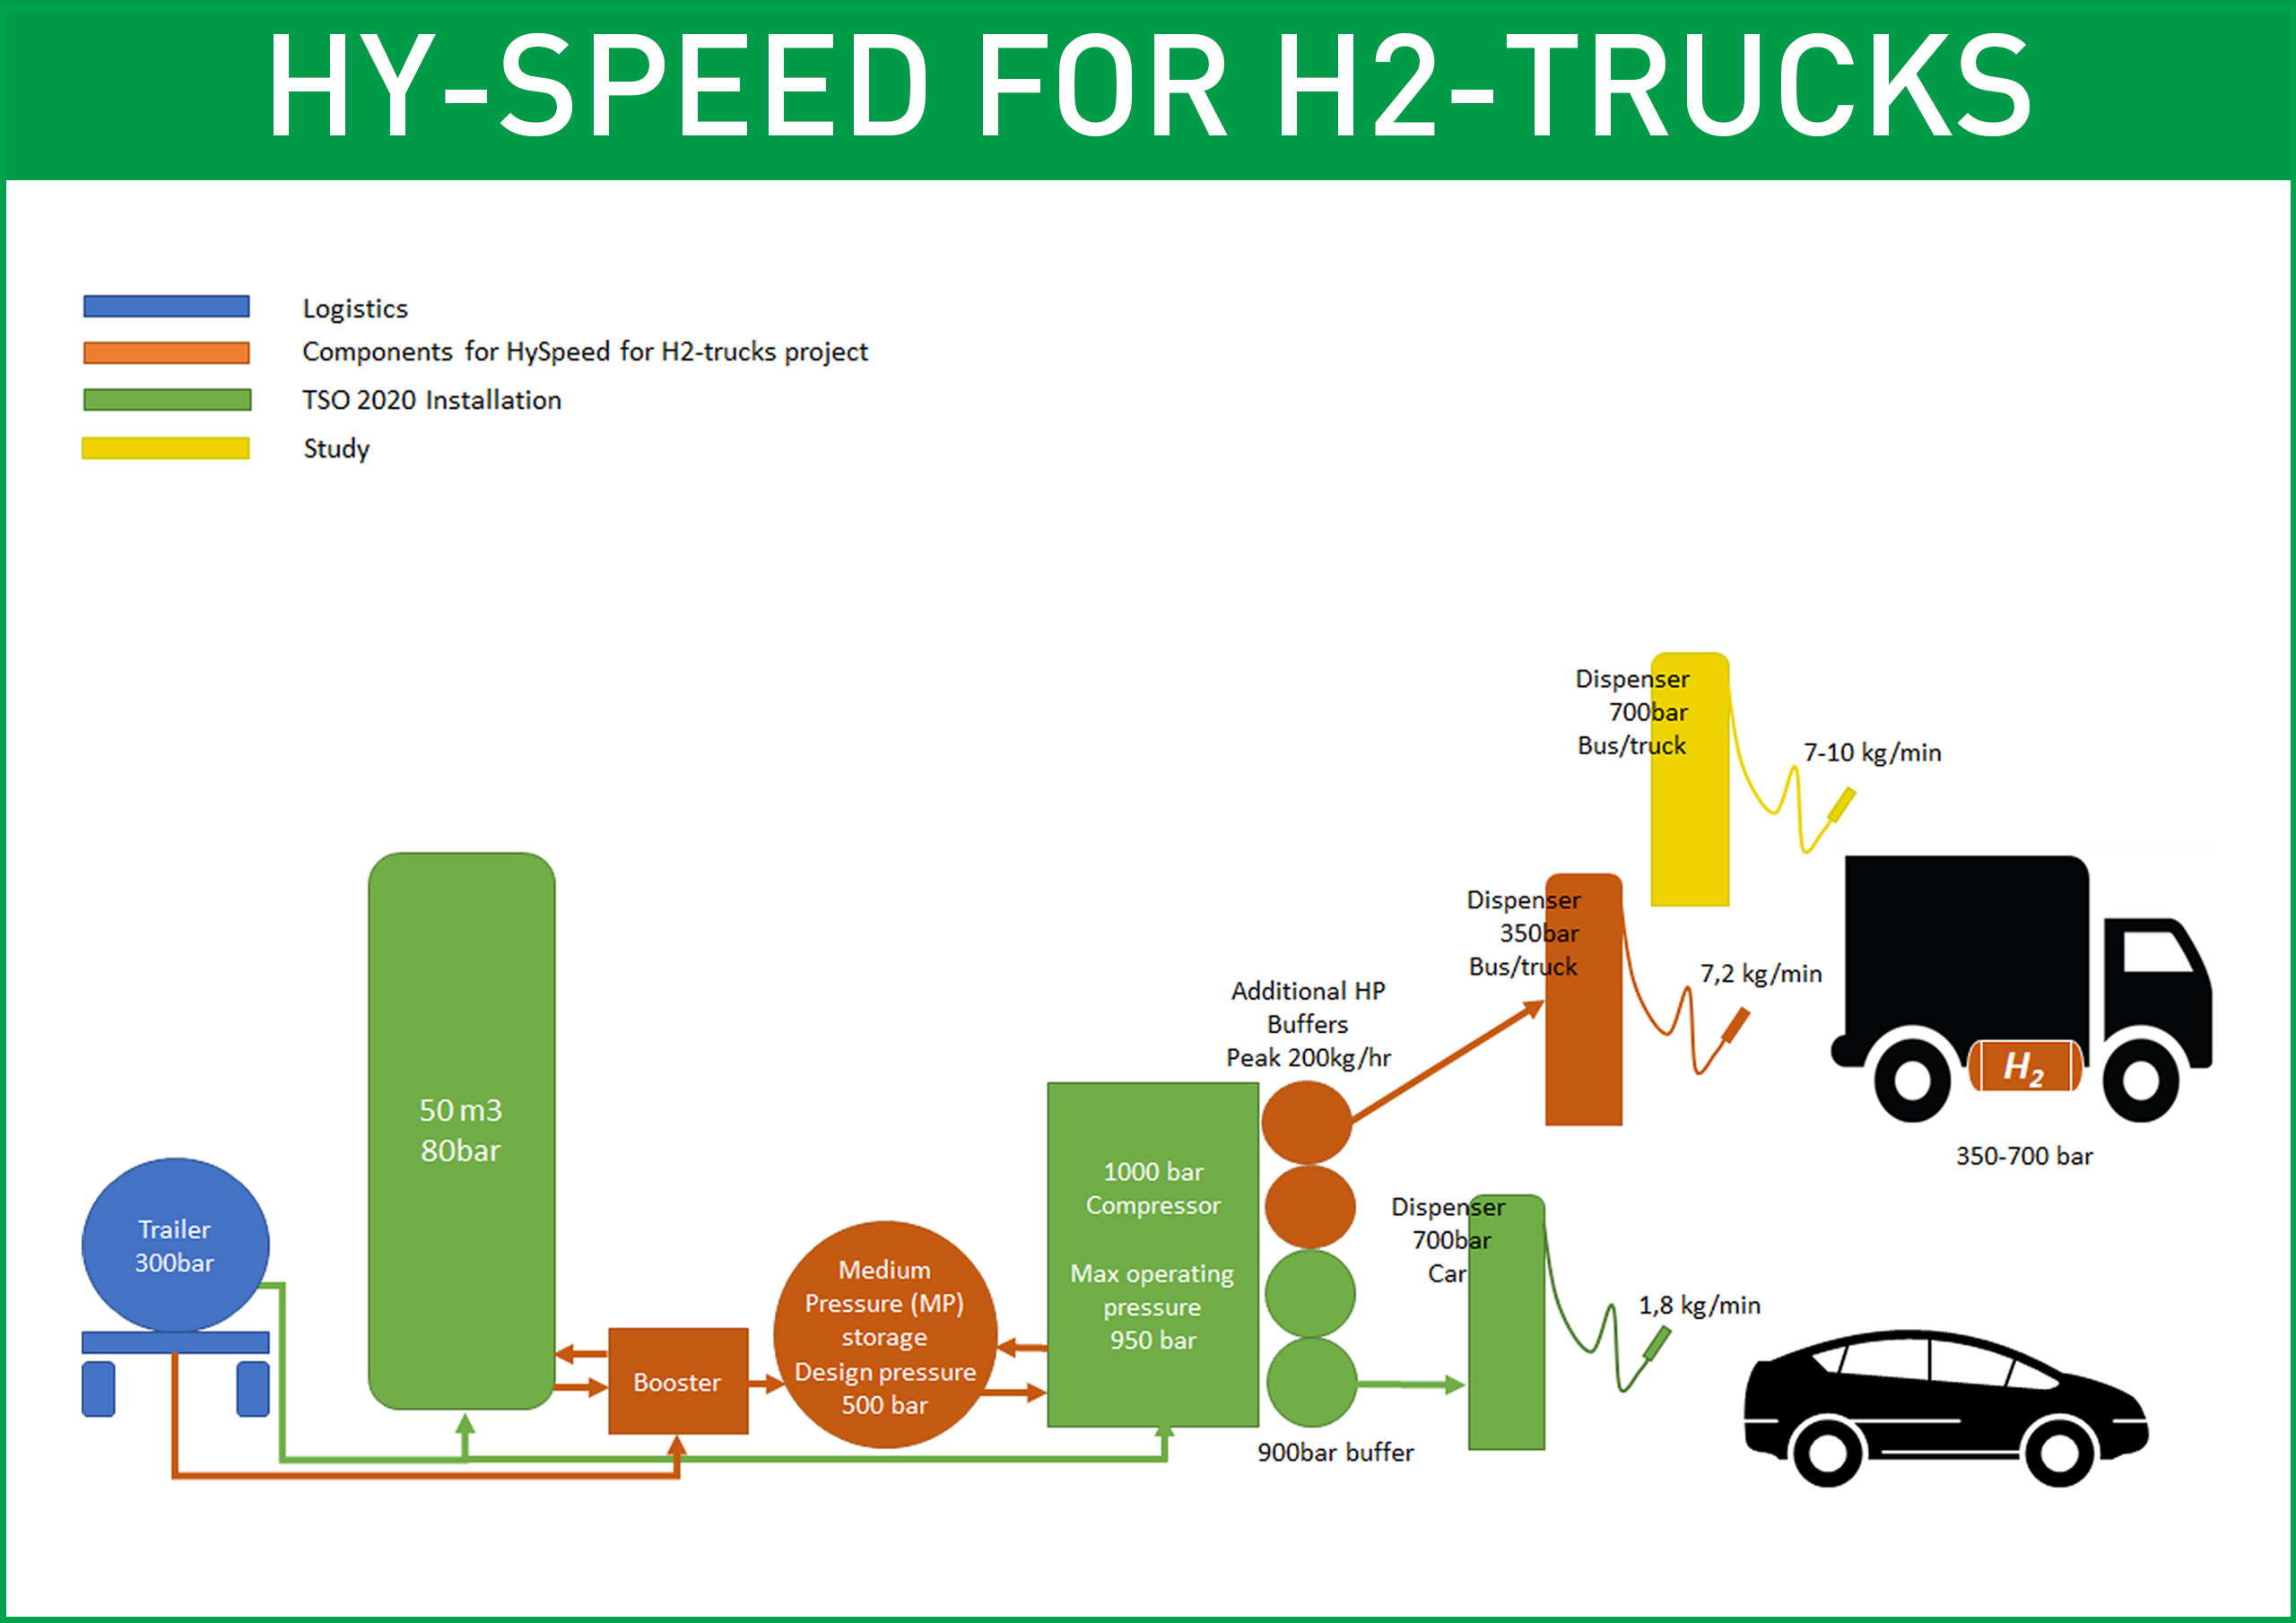 Hy-speed for H2-trucks